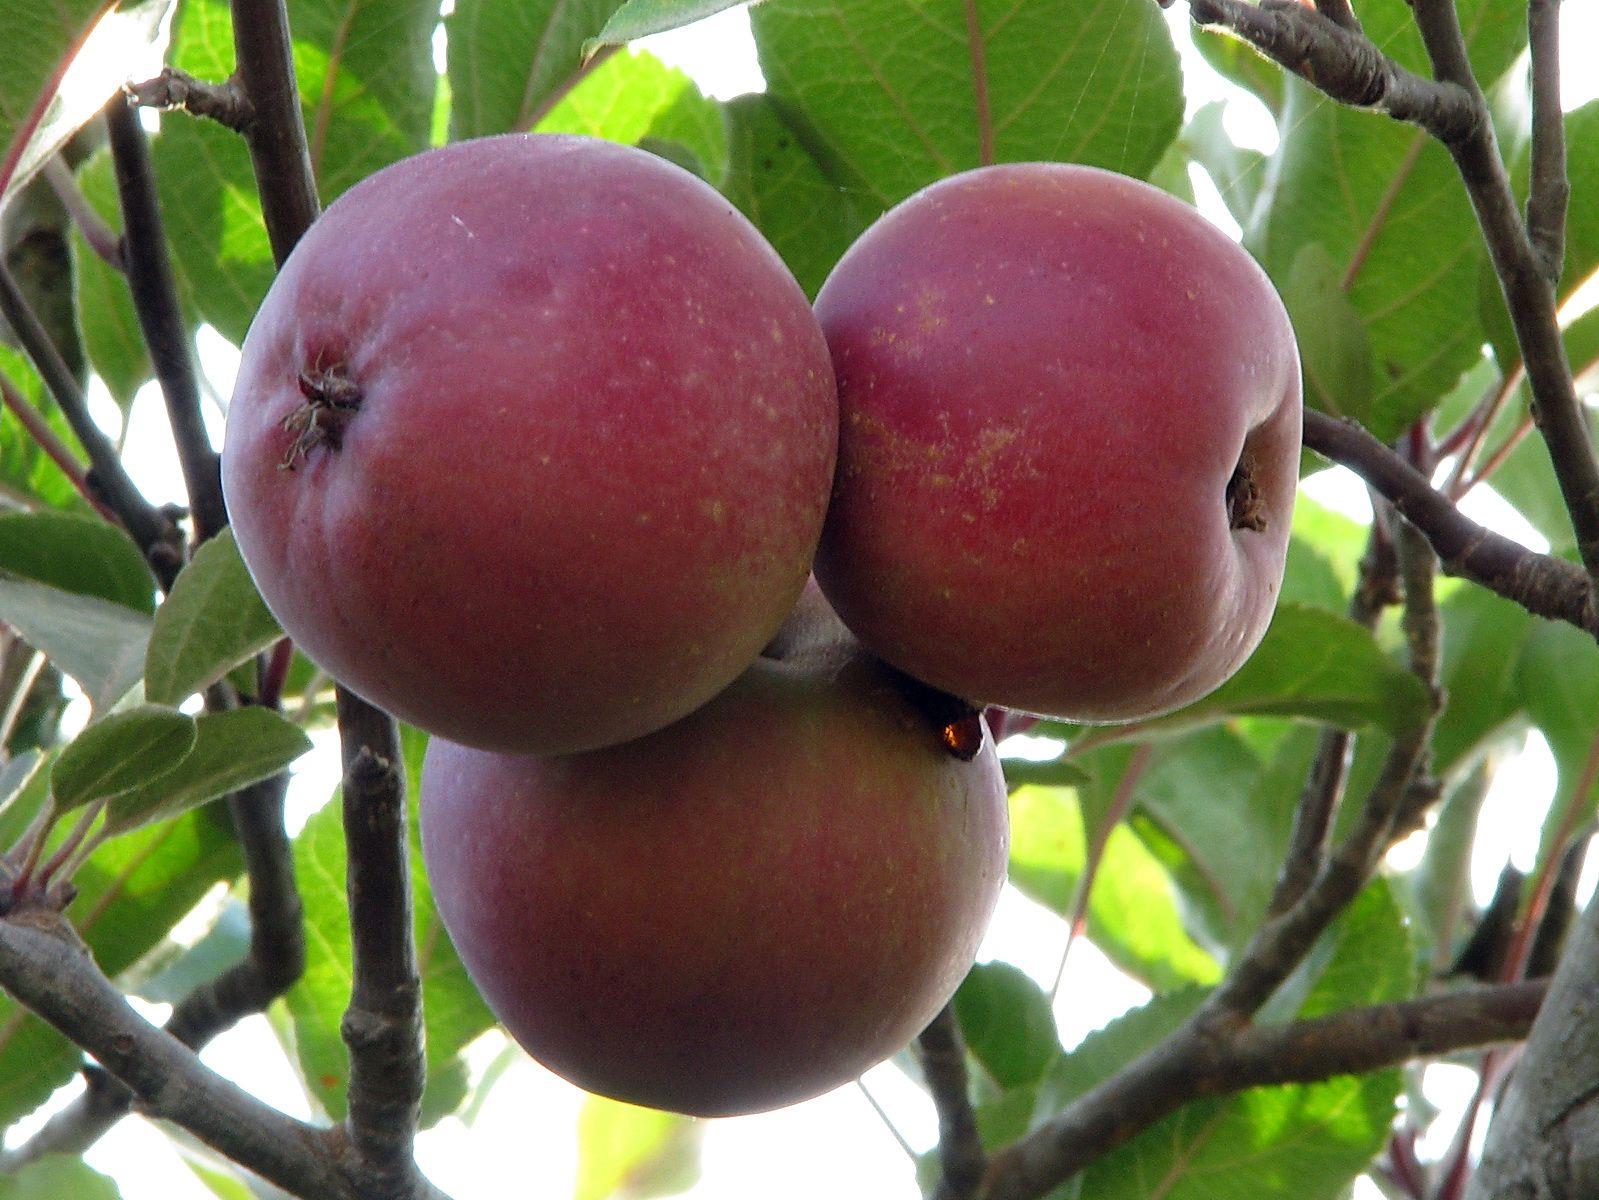 Malus sylvestris - European Wild Apple, Wild Crabapple, Common Crabapple, תפוח היערות, תפוח היערות